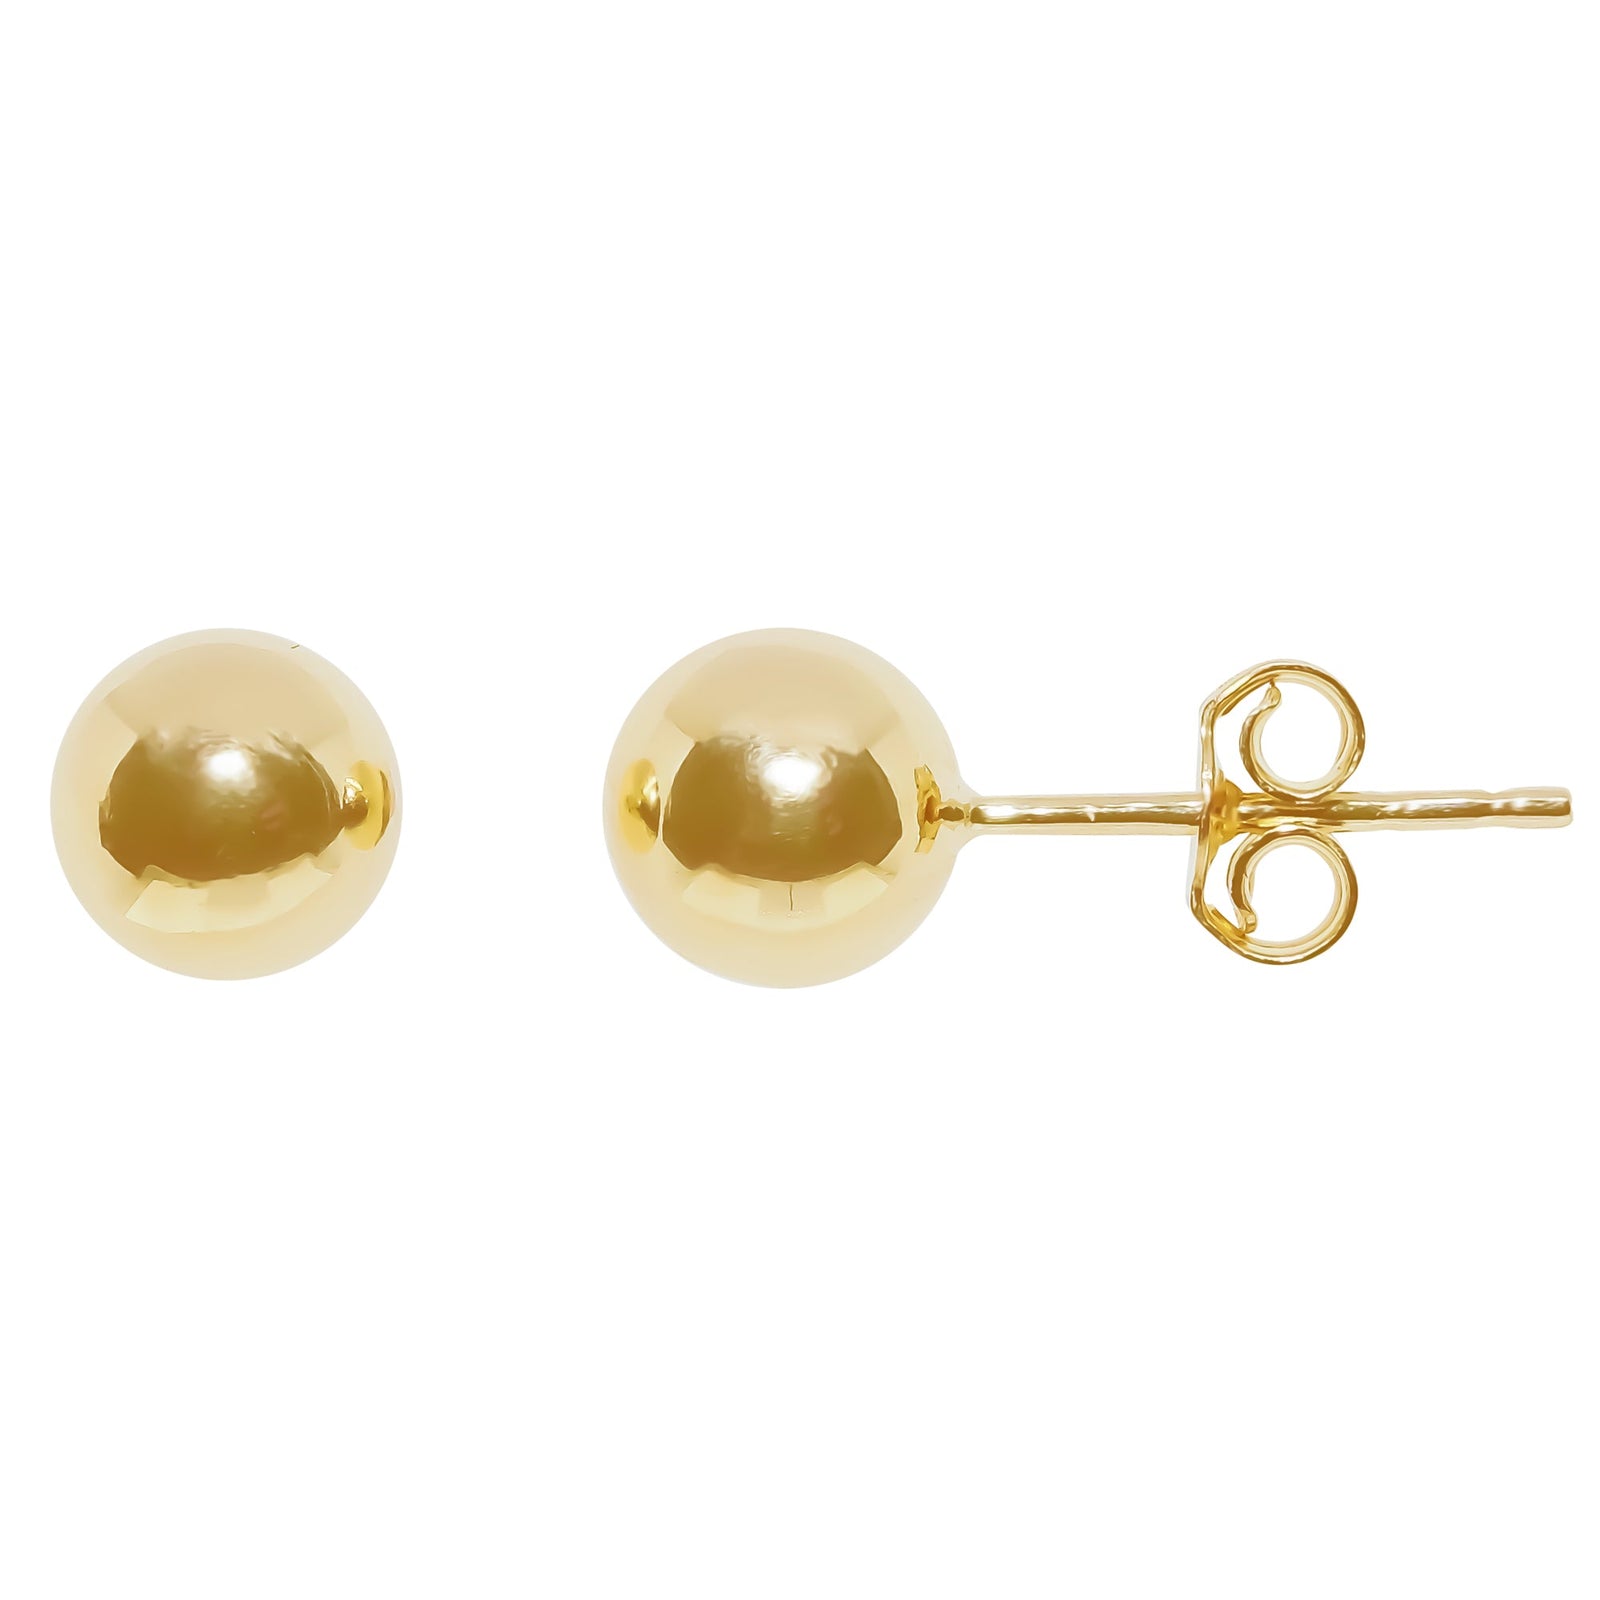 9ct gold 6mm ball stud earrings